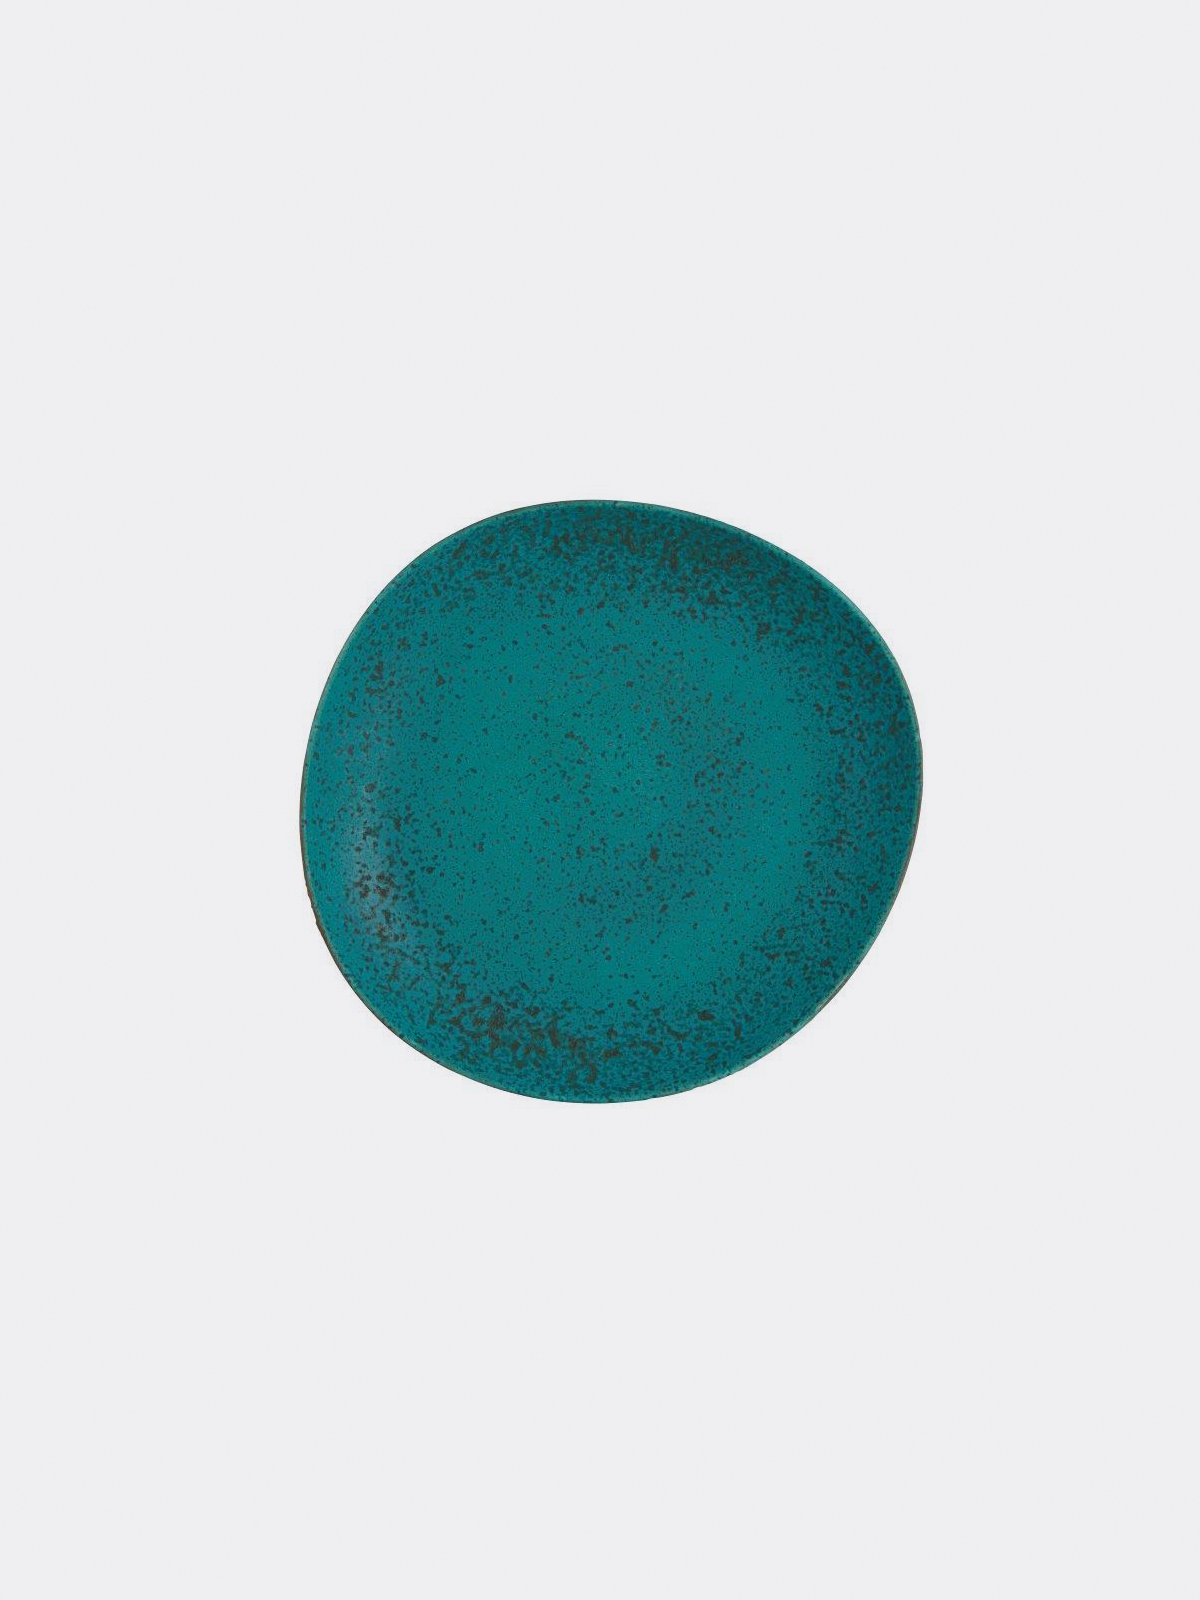 Casa Alegre Blue Green Thick Textured 27cm Sauvage Pasta Plate